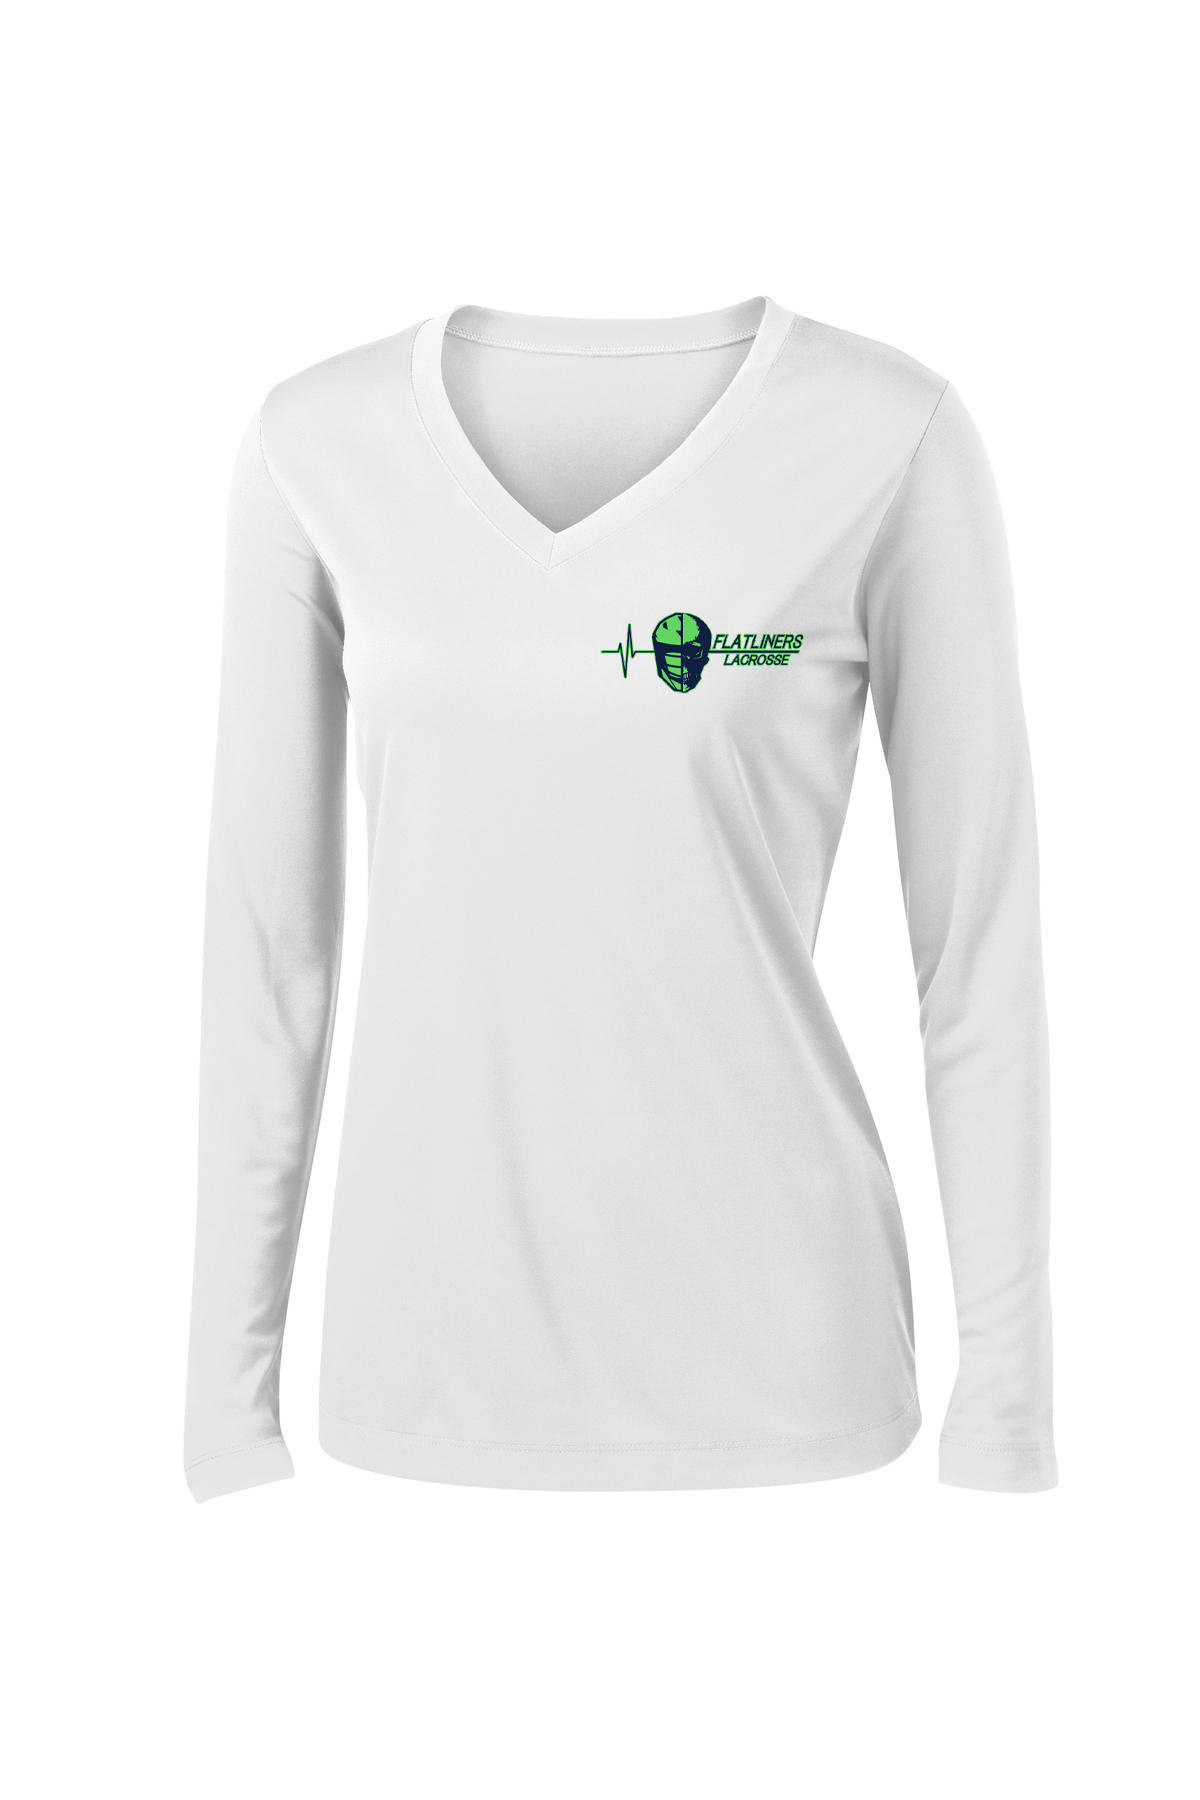 Flatliners Lacrosse Women's White Long Sleeve Performance Shirt